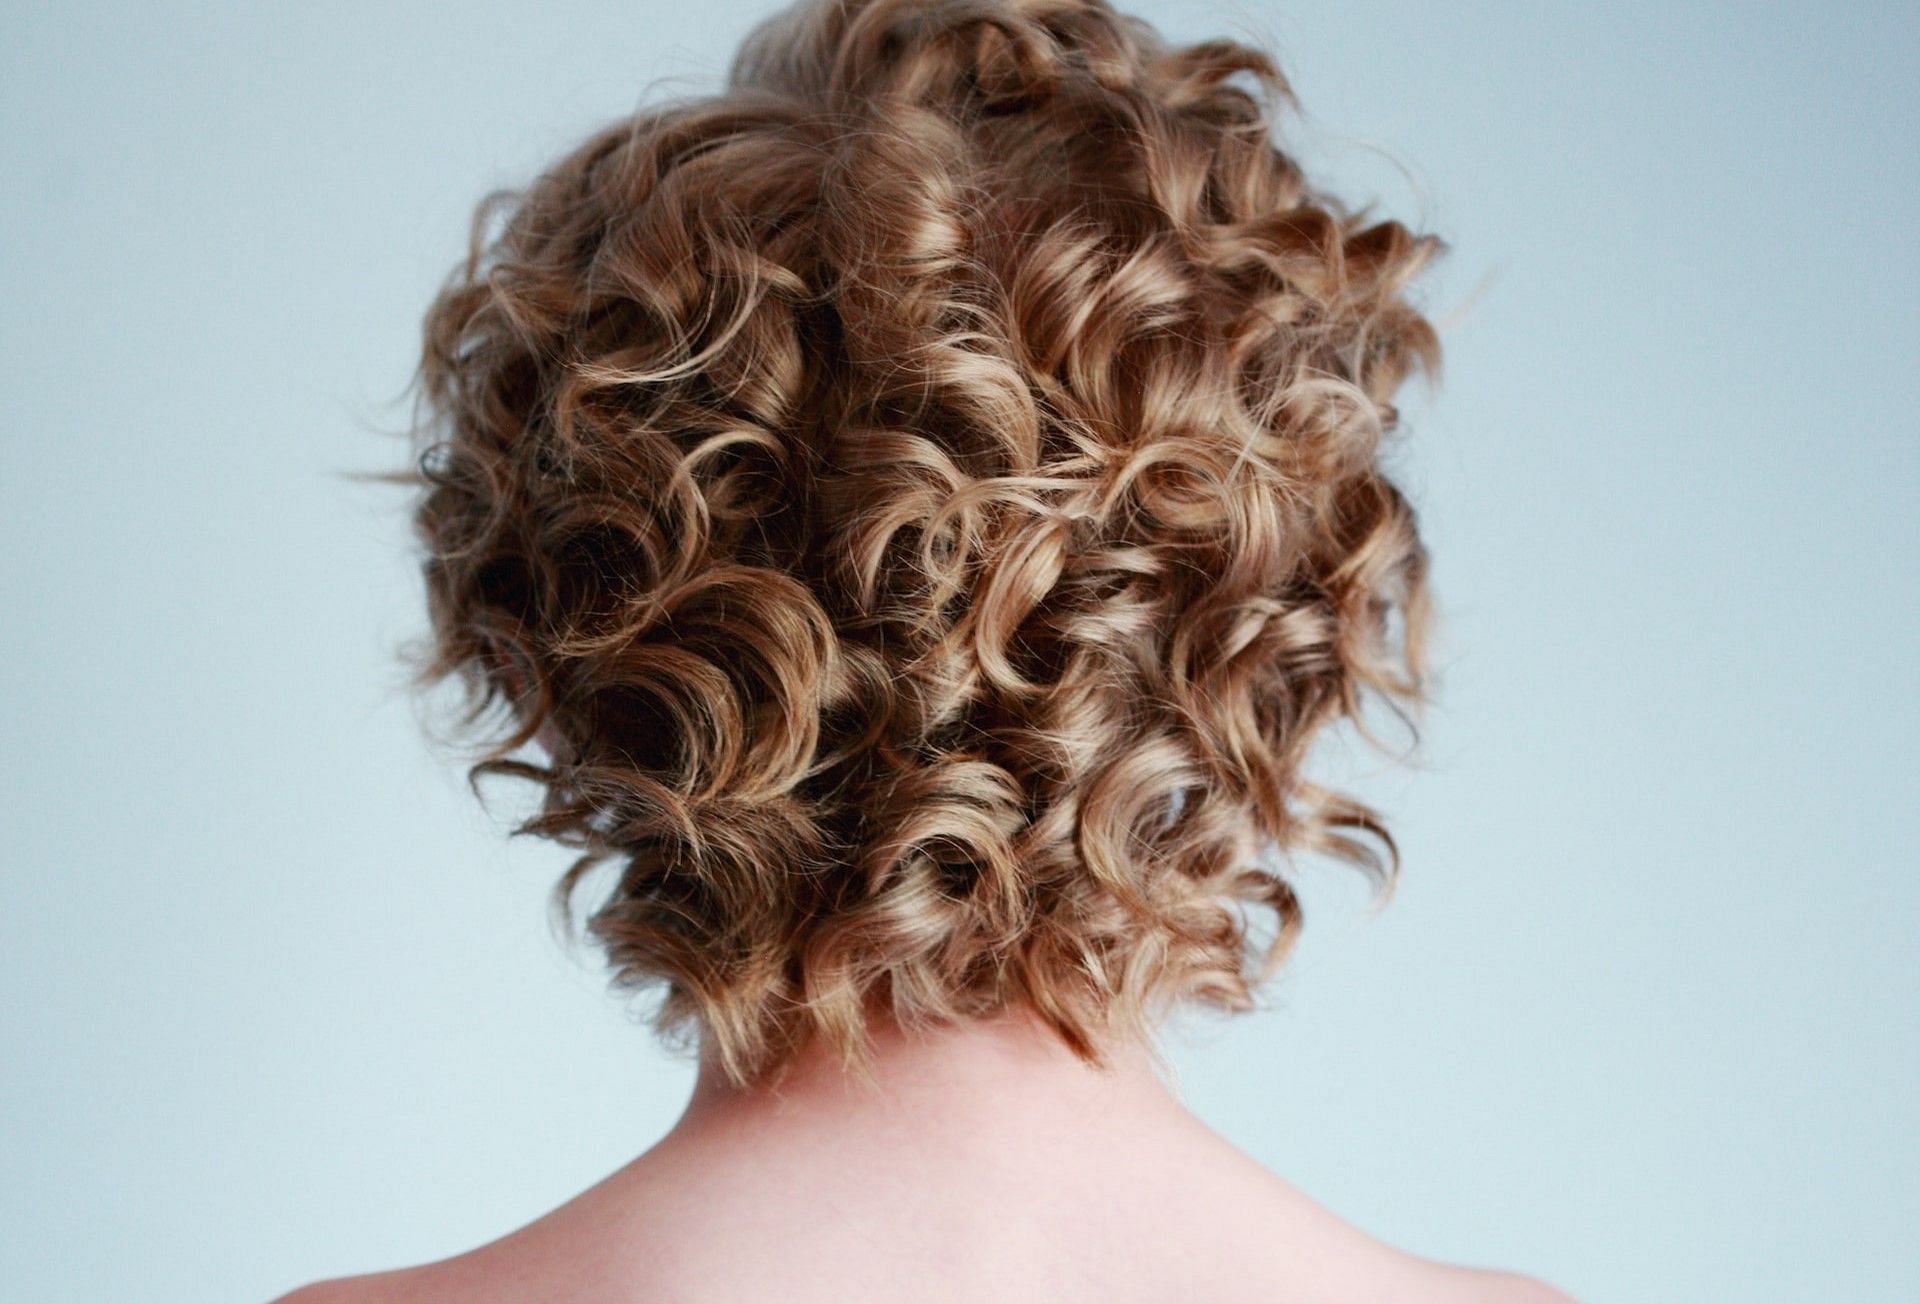 Curly hiar (photo by Alexander Gray for Unsplash)